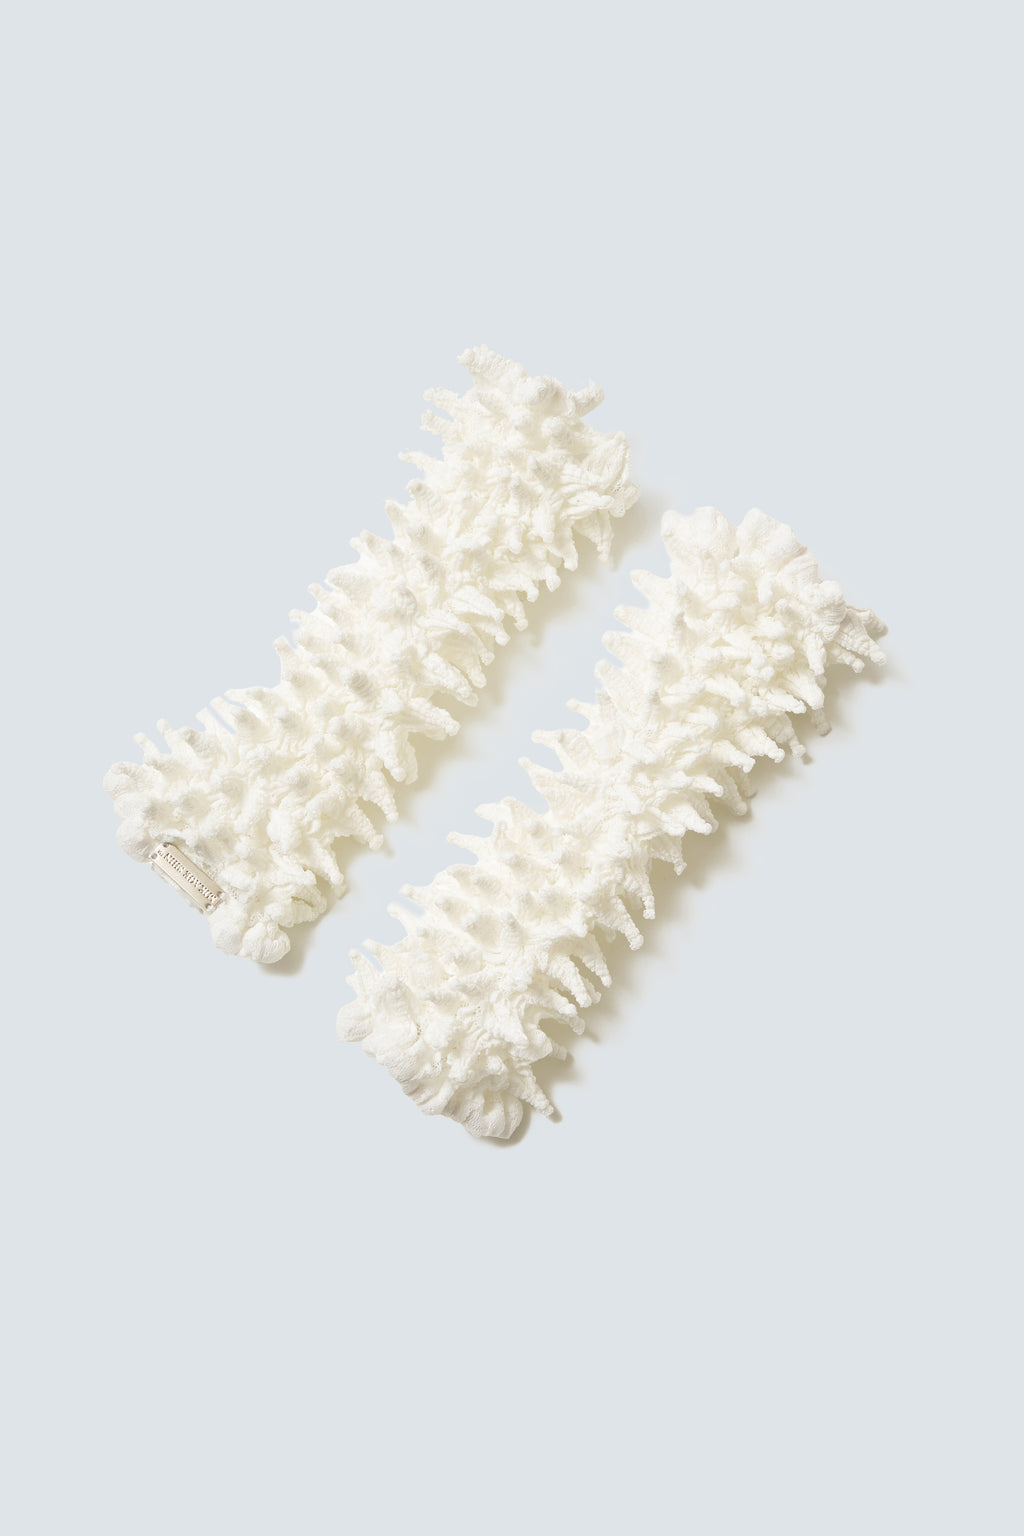 【予約商品】Versatile Spiky Shibori Gloves / Hybrid Lace